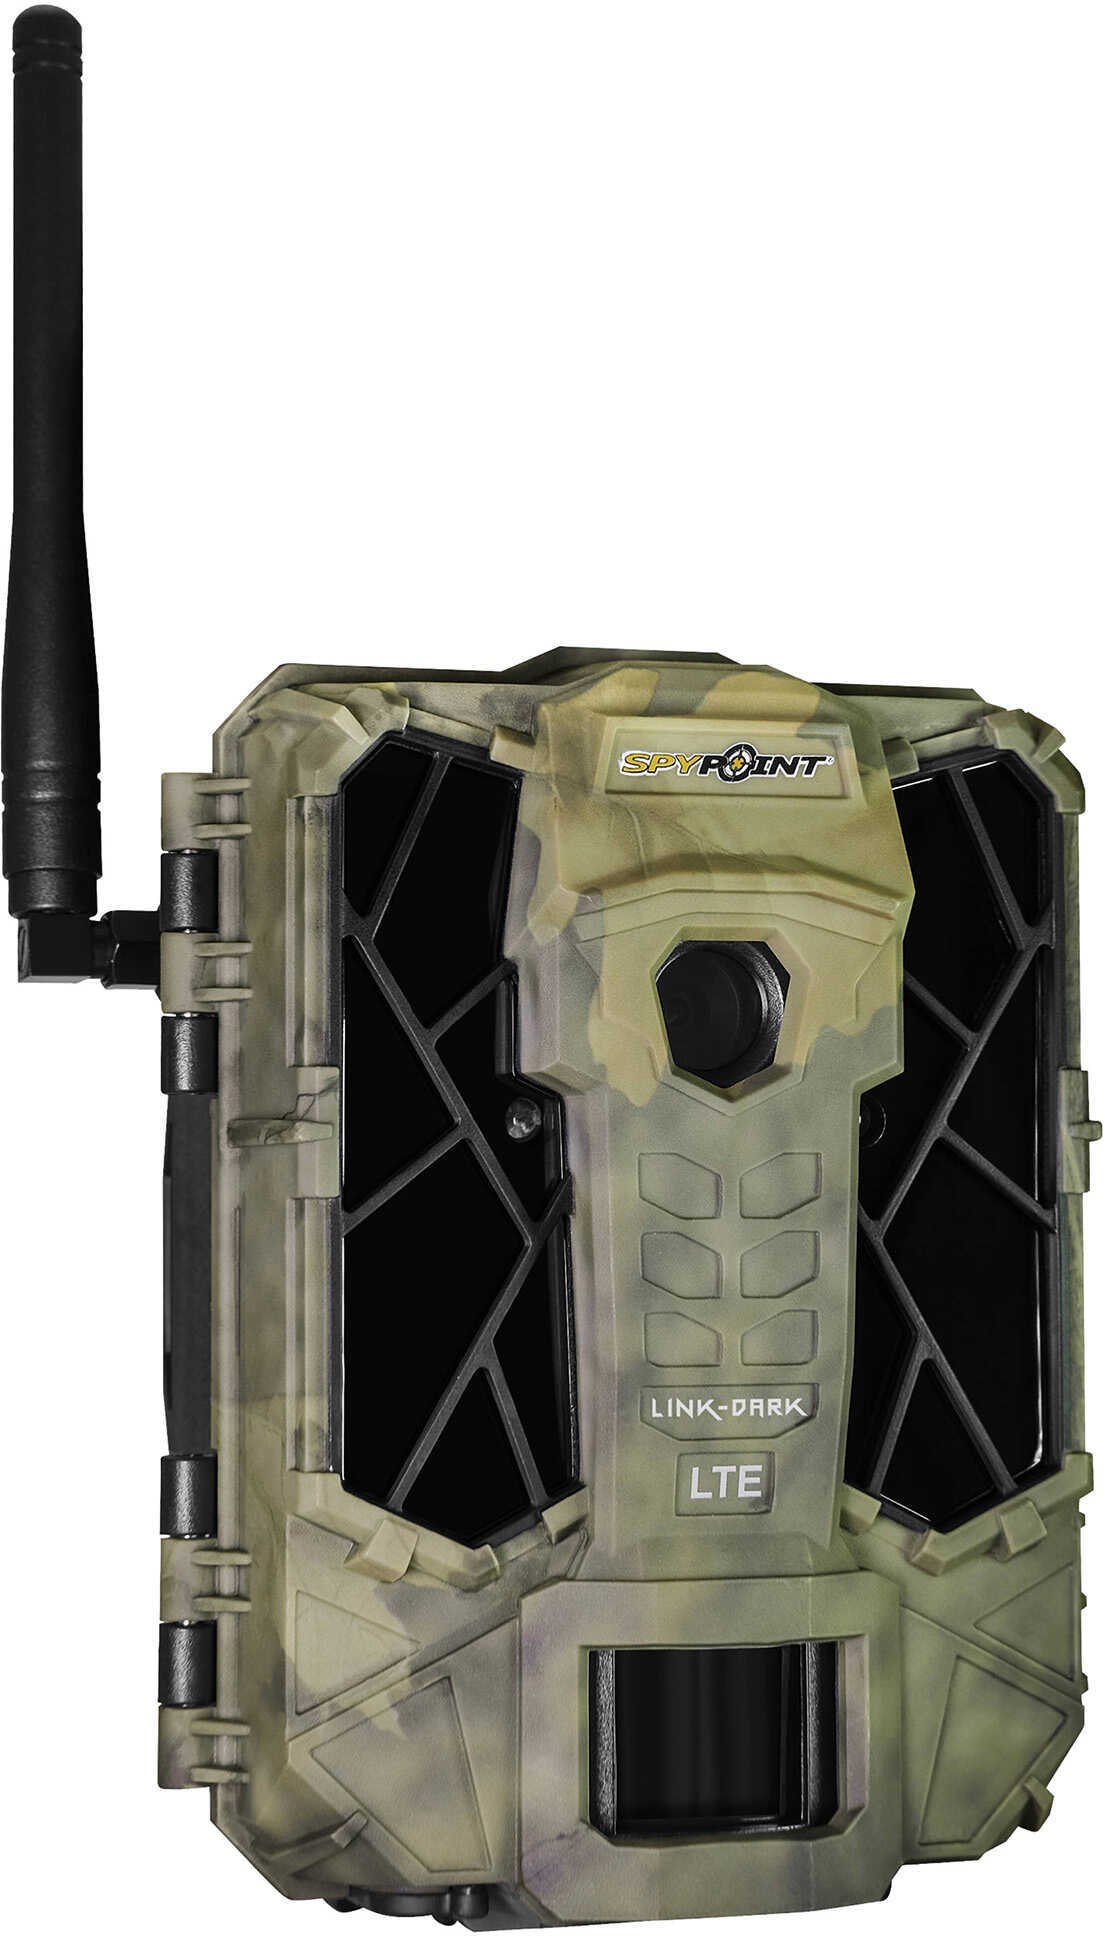 Spy Point Cellular Series Verizon, Camouflage